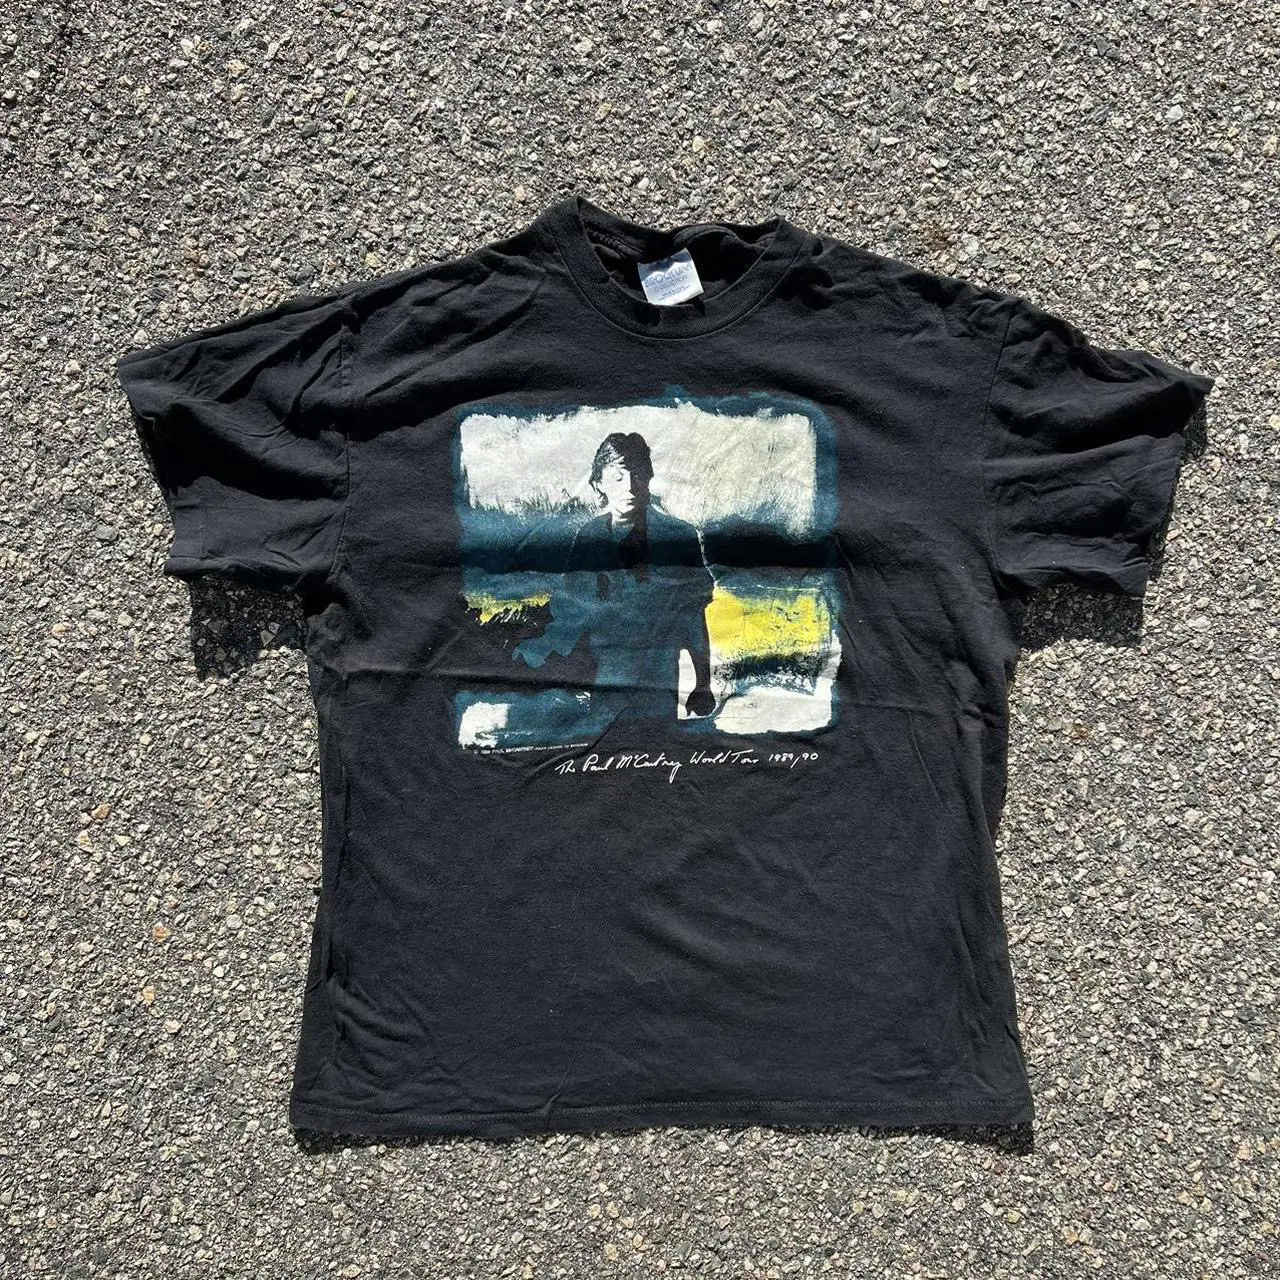 Vintage 90’s Paul McCartney Tshirt (fits a large)